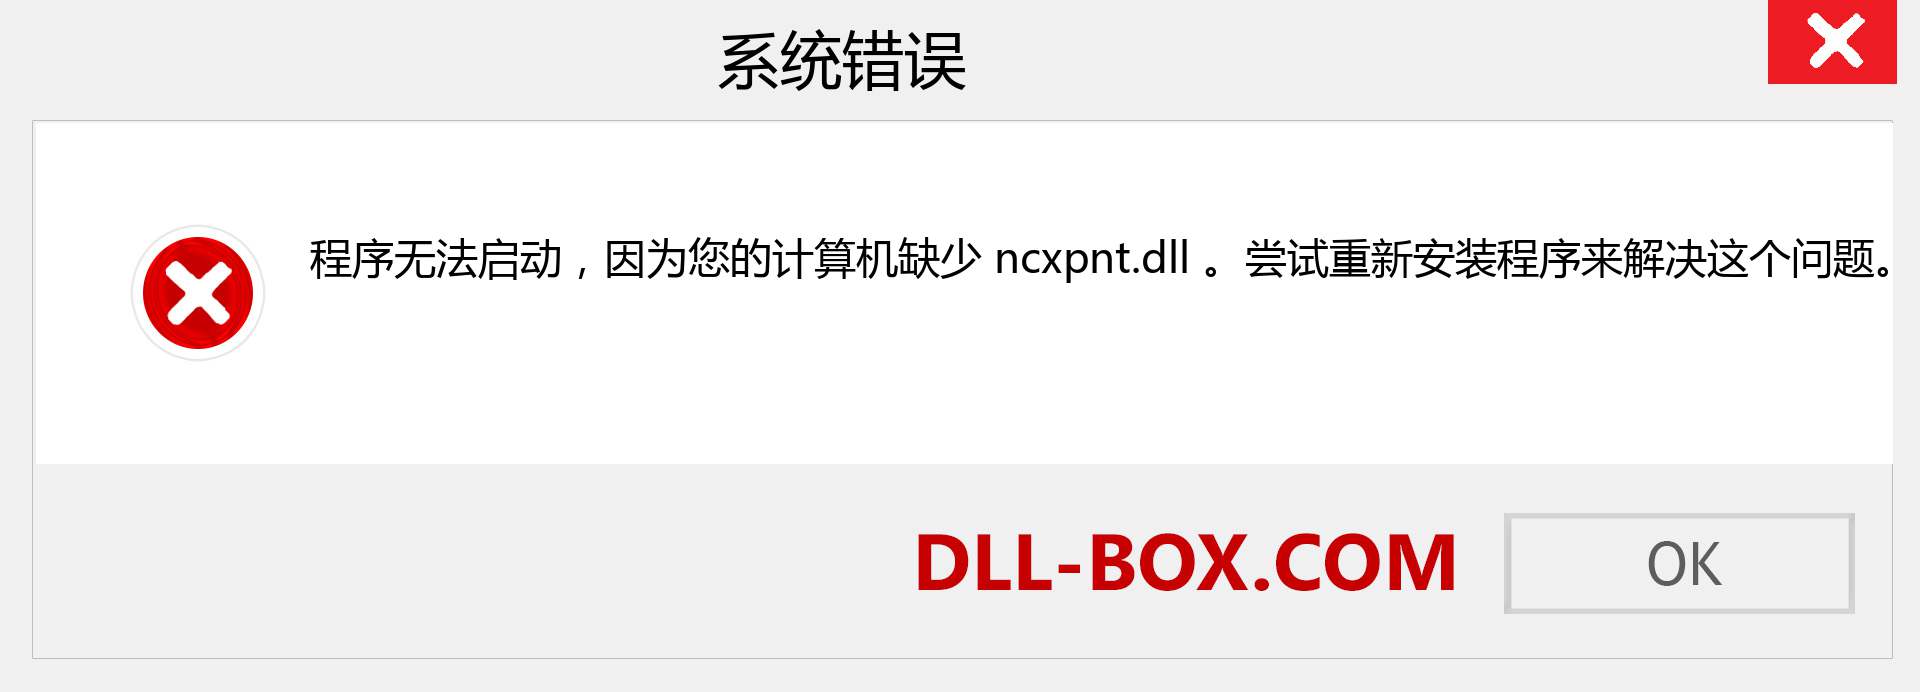 ncxpnt.dll 文件丢失？。 适用于 Windows 7、8、10 的下载 - 修复 Windows、照片、图像上的 ncxpnt dll 丢失错误